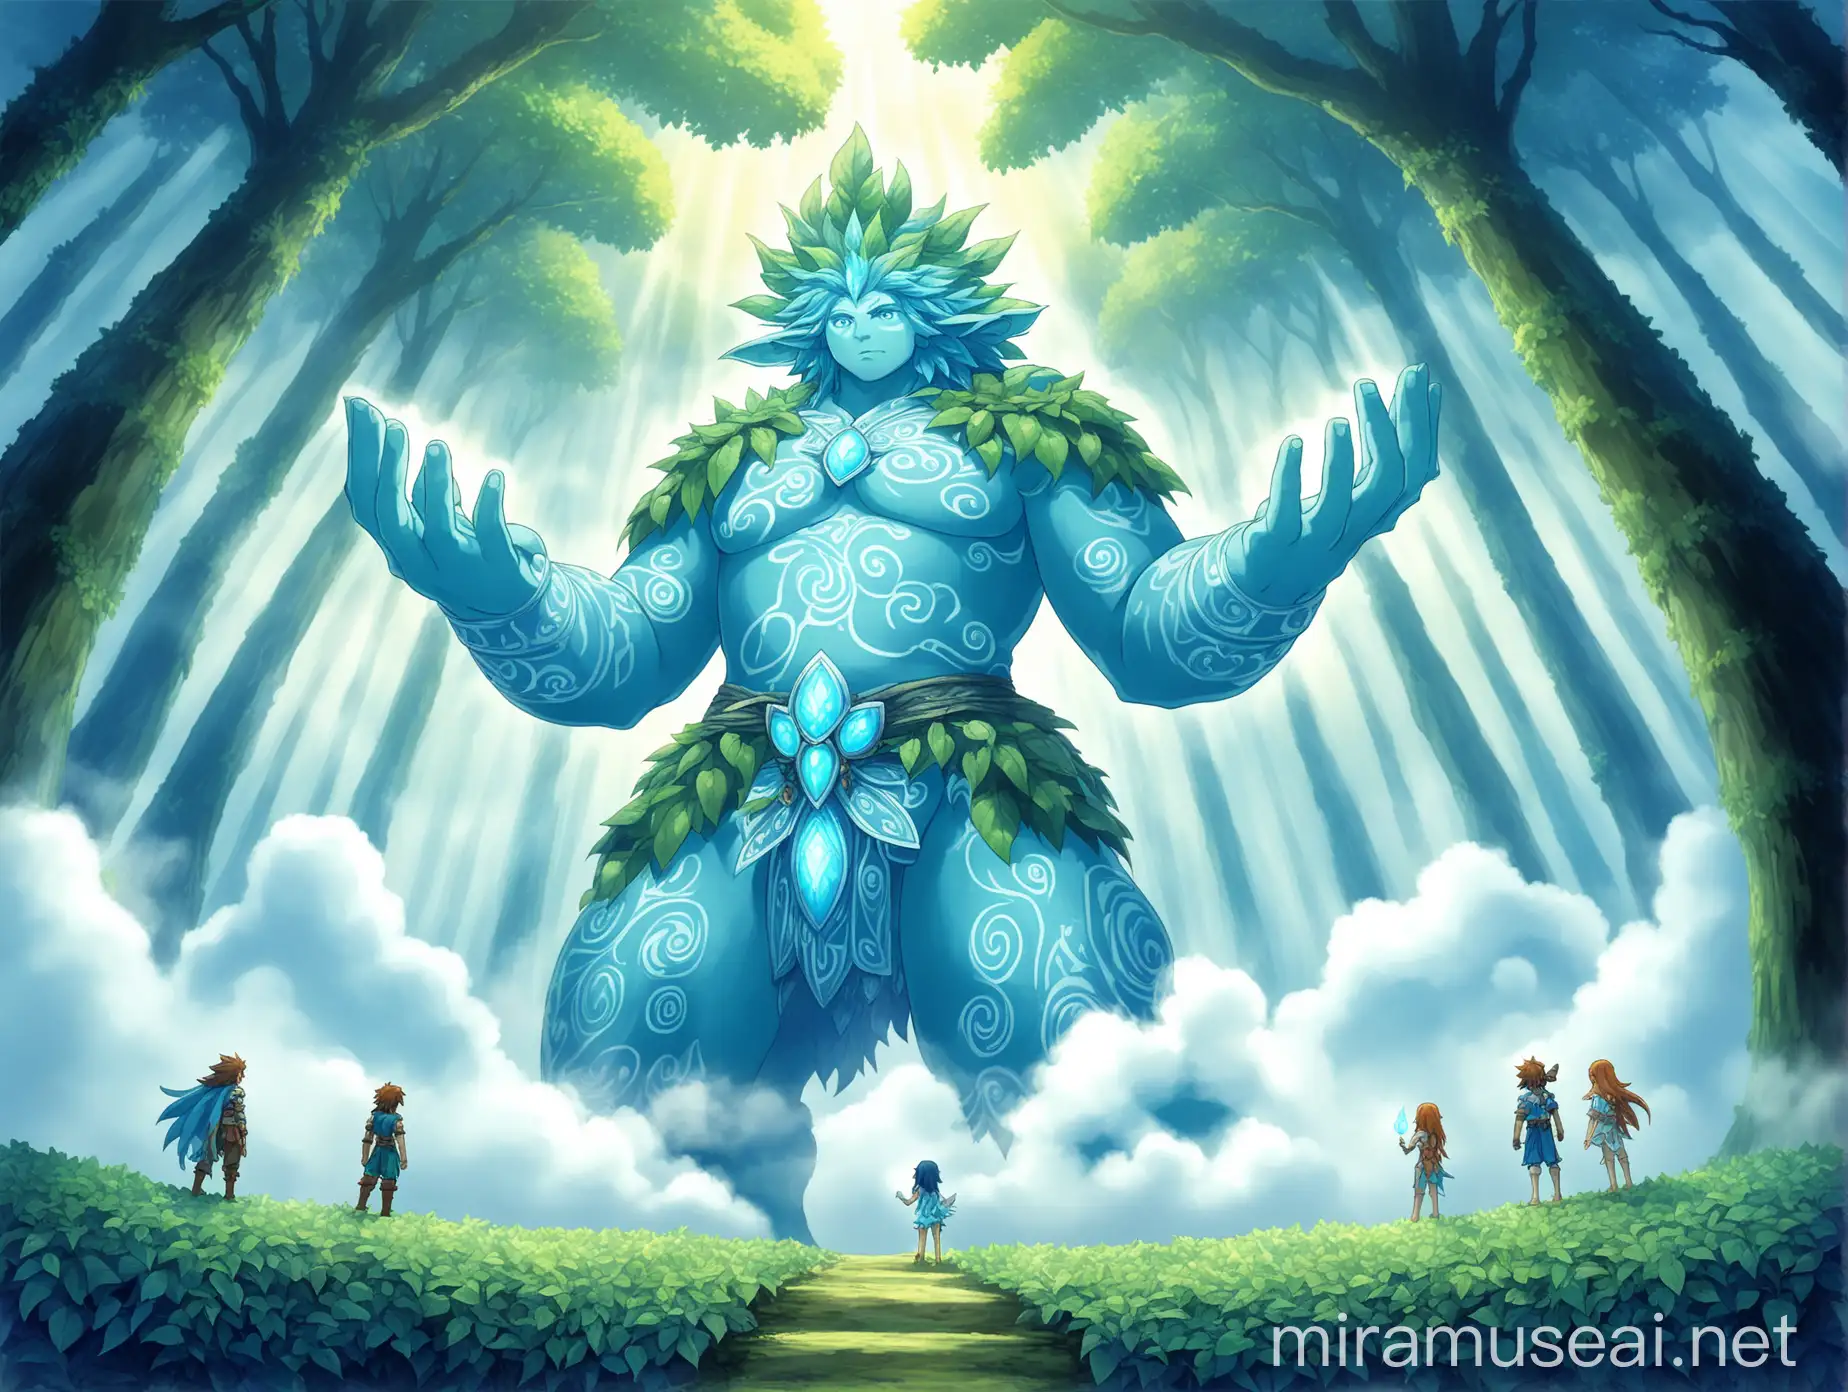 Enchanted Fantasy Giant Tree of Mana in Azure Glow Amidst Foggy Anime Landscape